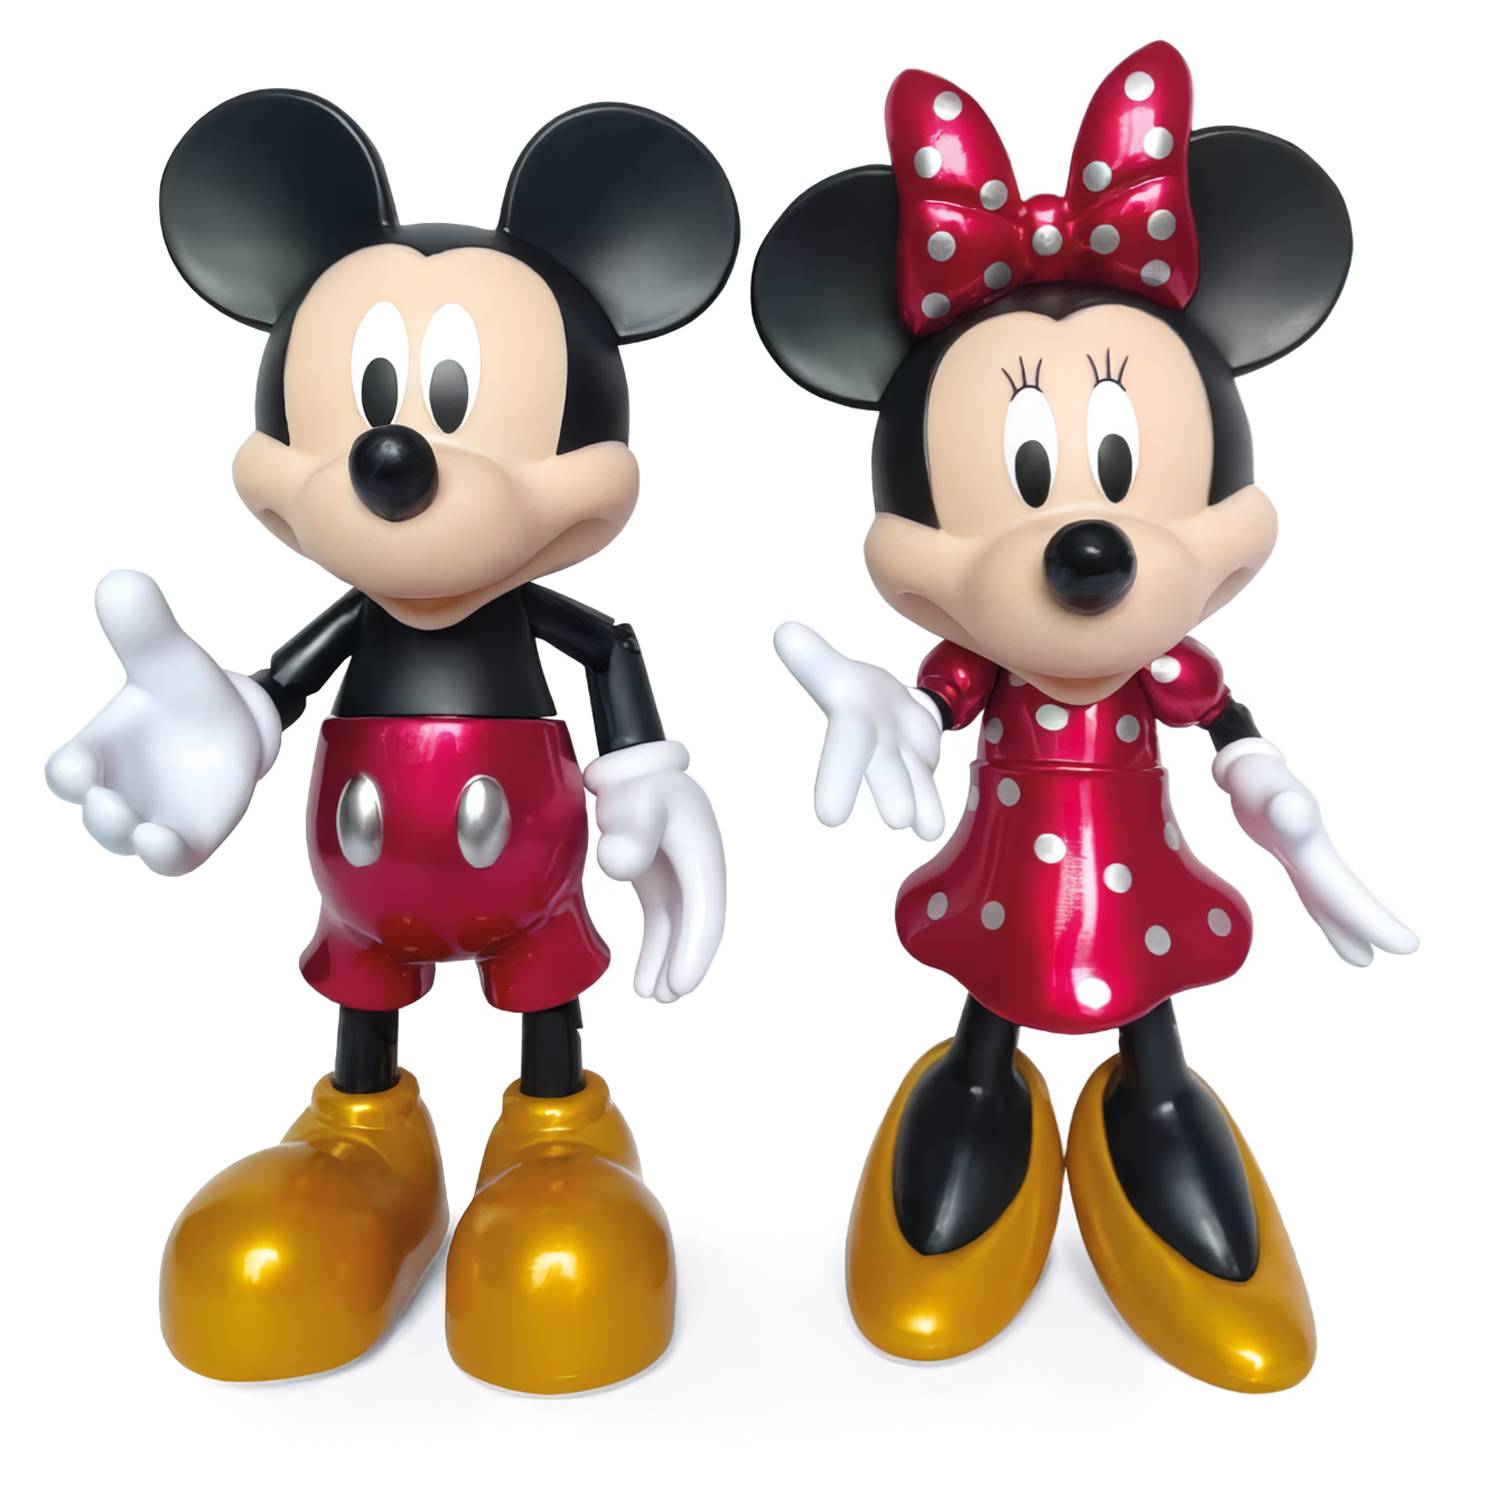  Set de Figuras Articulables Mickey Mouse y Minnie Mouse  MM-2D100